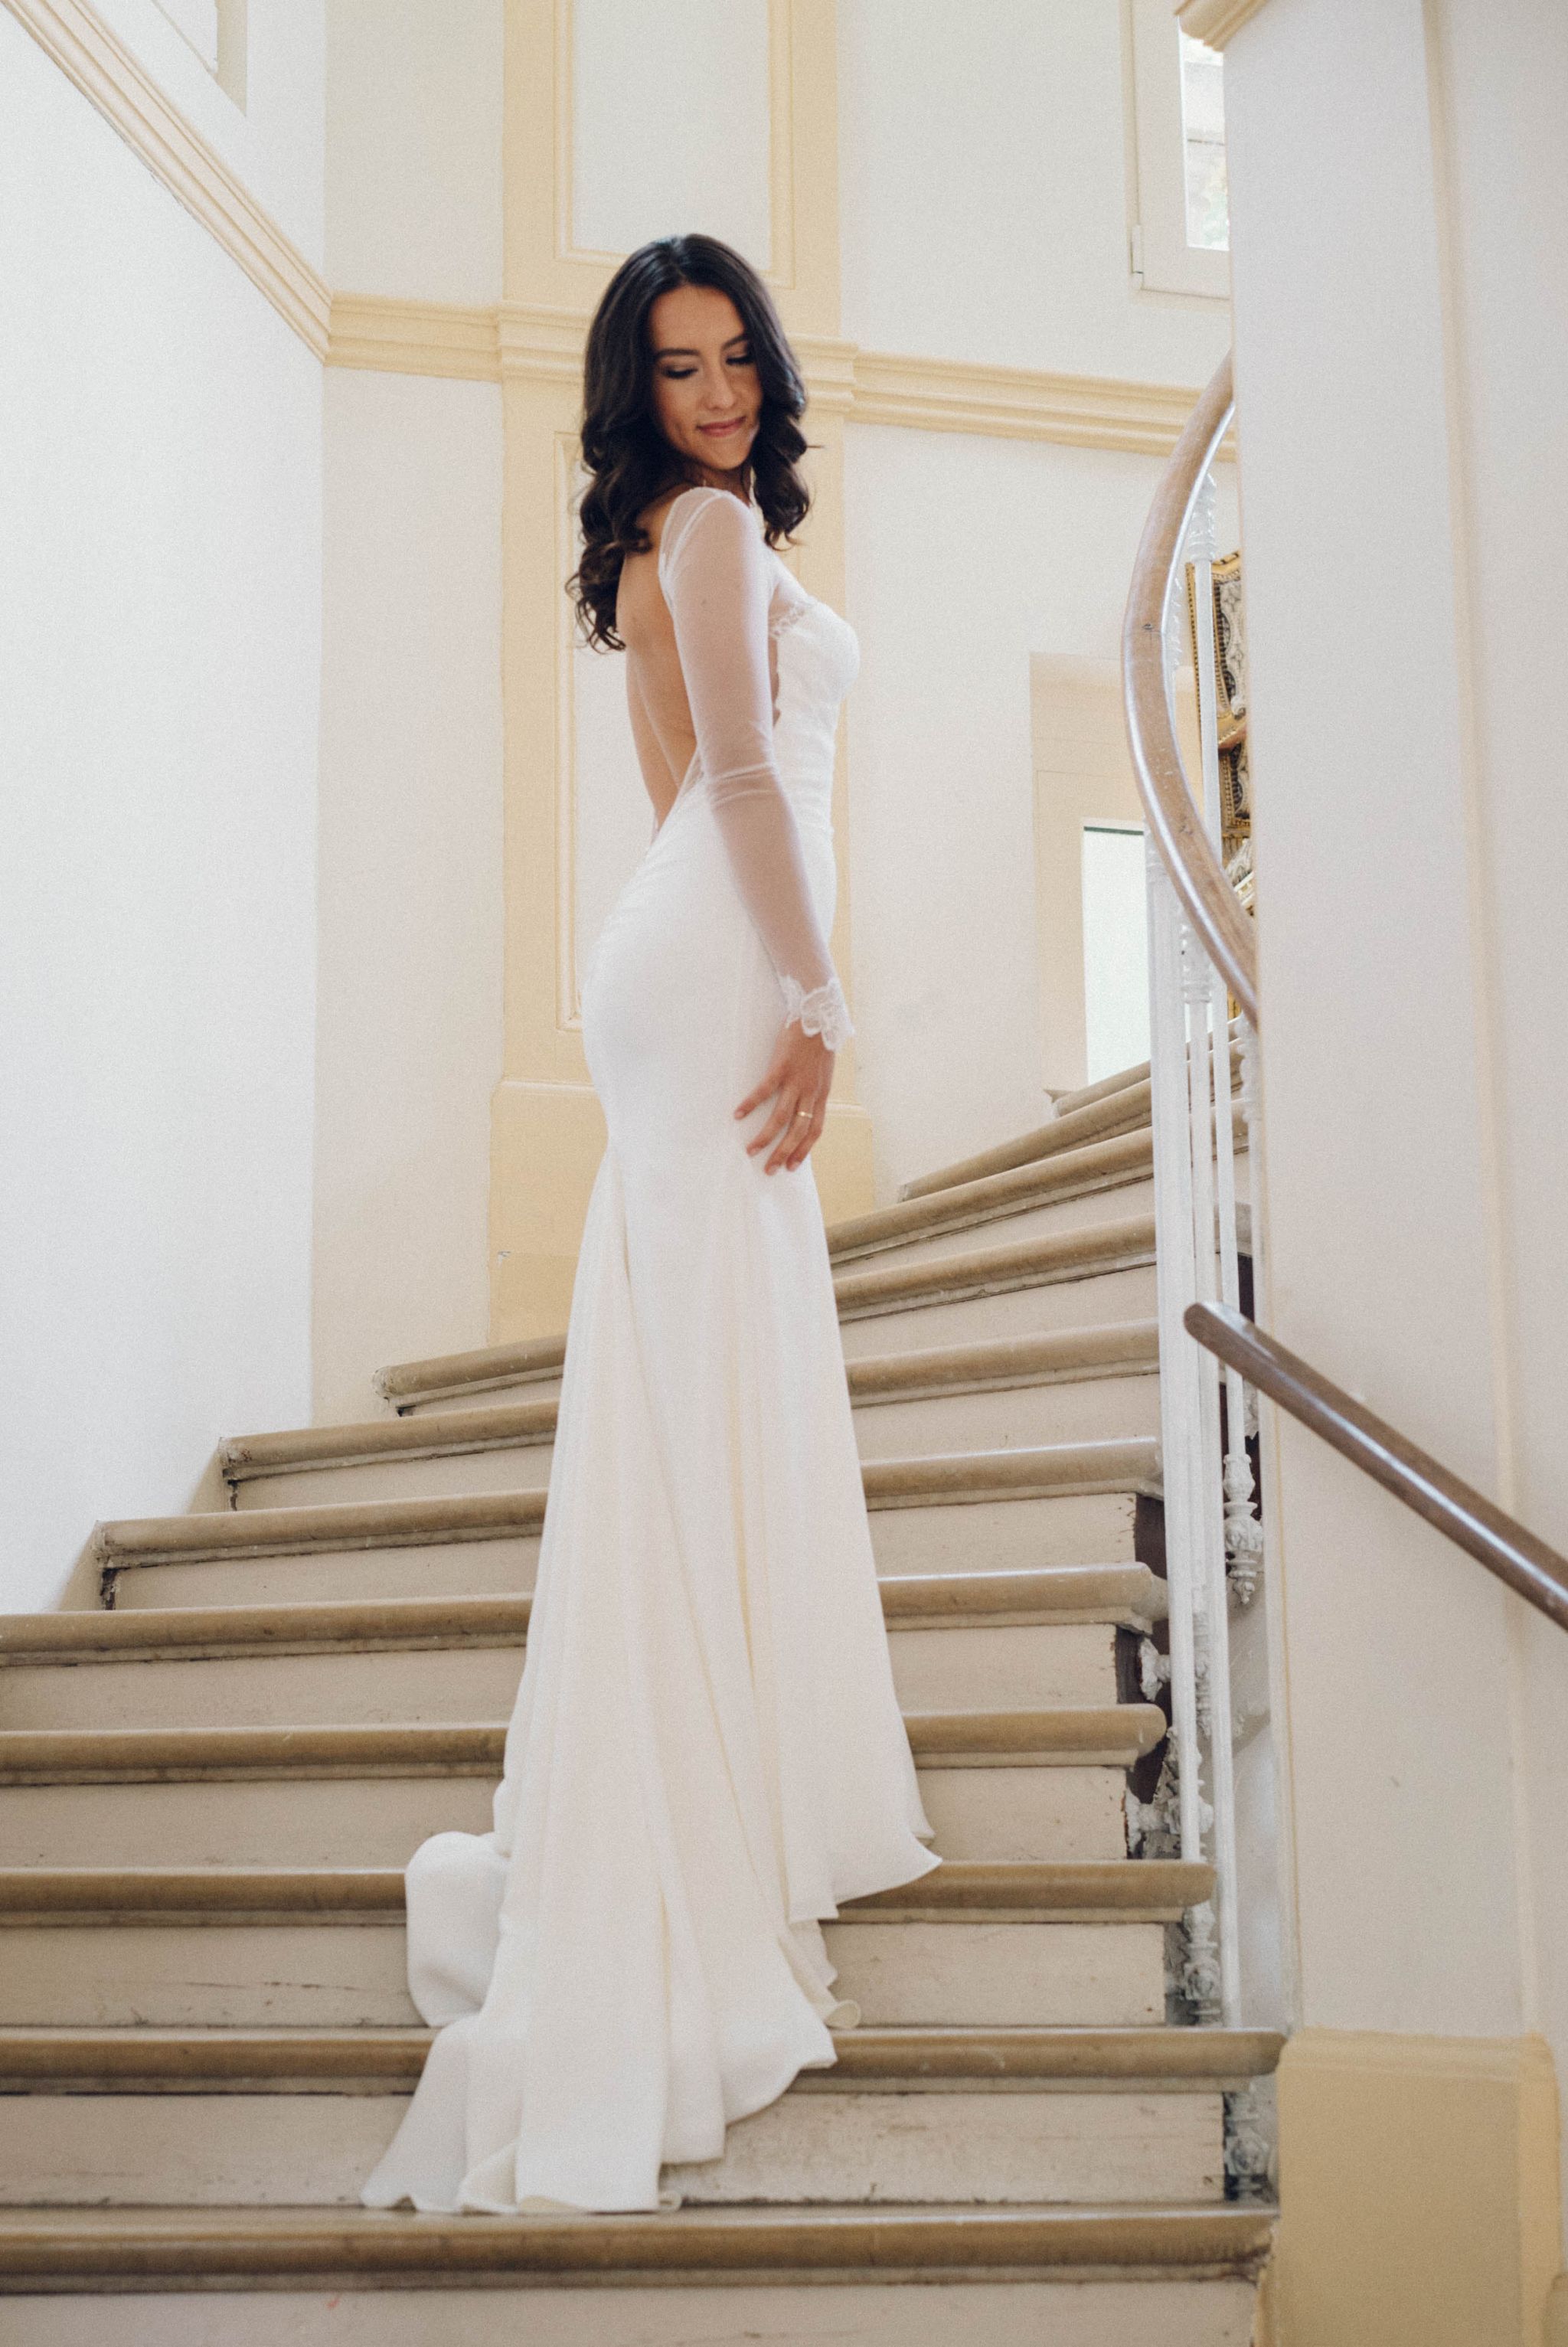 Stunning backless wedding dress